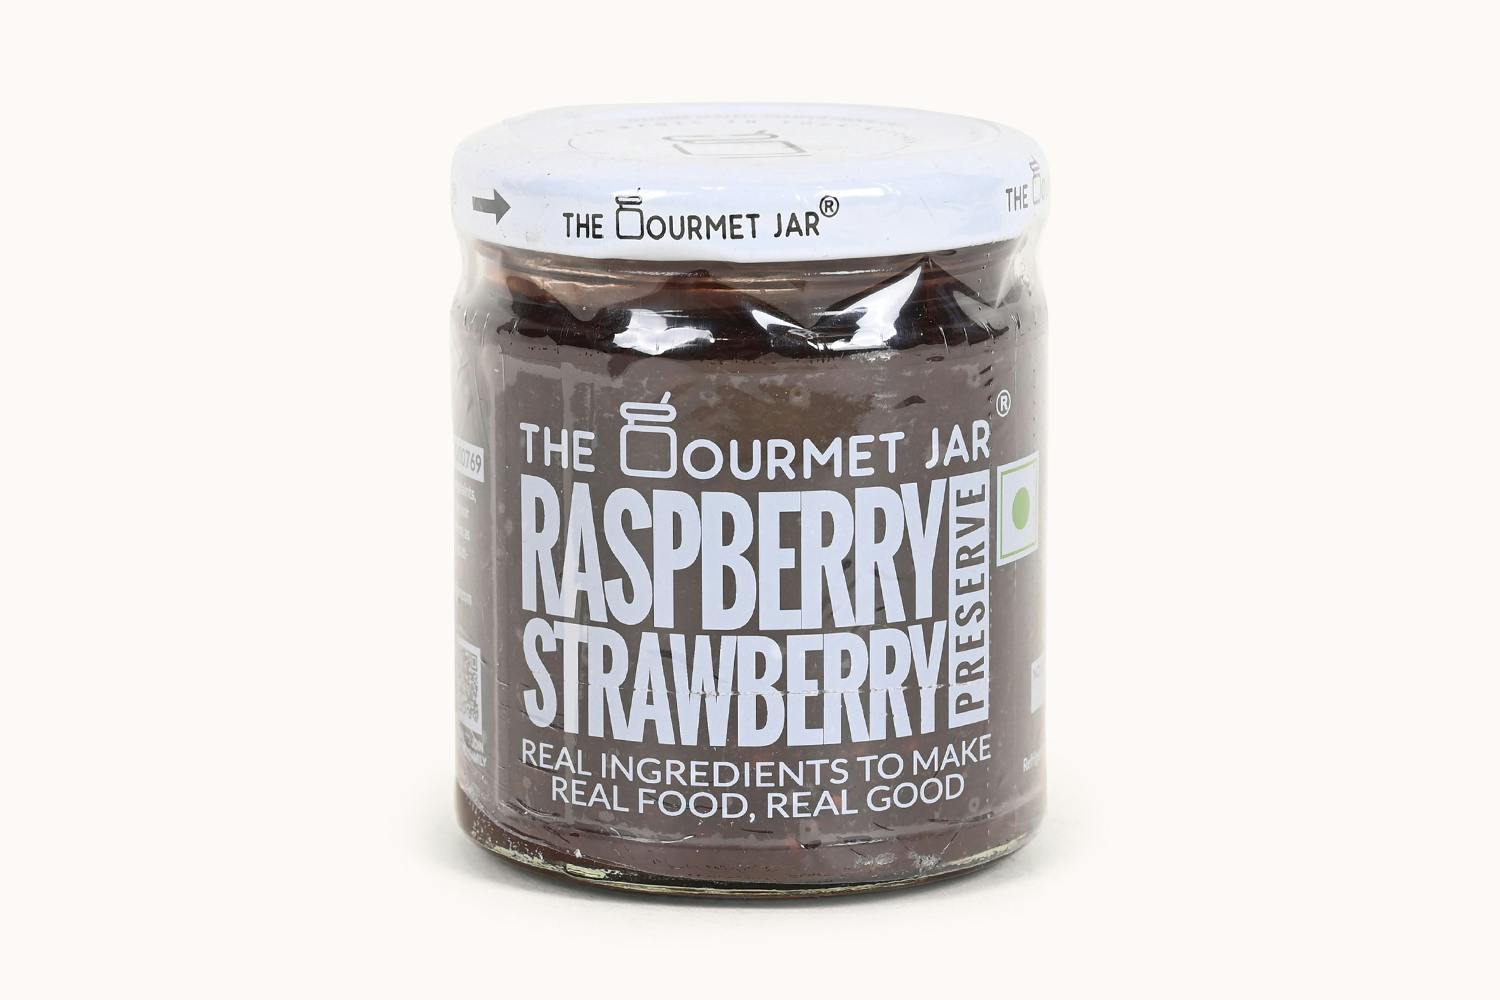 The Gourmet Jar Raspberry Strawberry Preserve